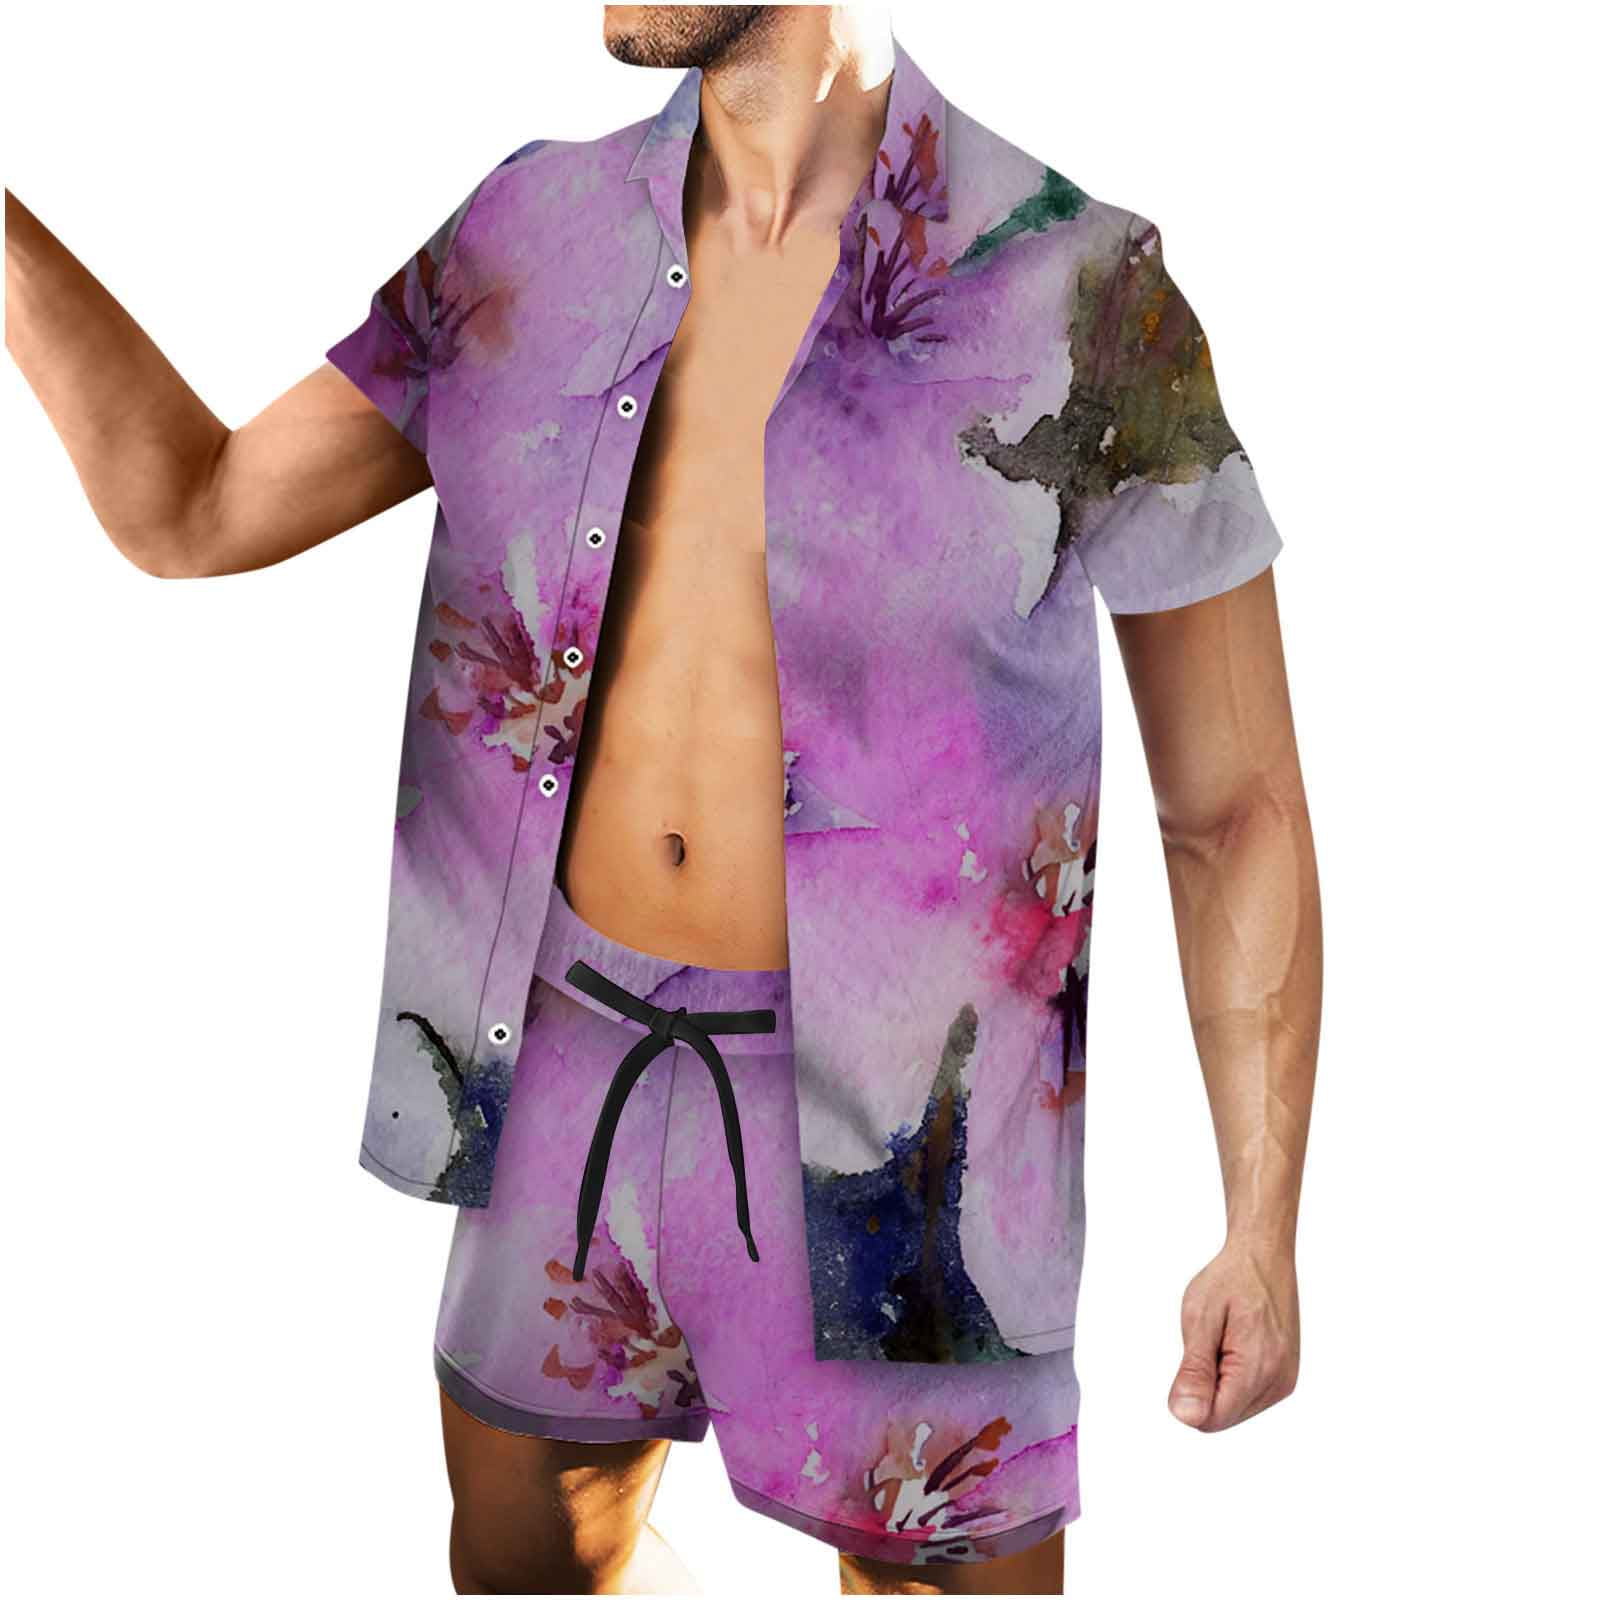 ZCFZJW Hawaiian Shirt for Men Tie Dye Flower Print Summer Casual Button  Down Short Sleeve Hawaiian Shirt Beach Shorts Outfit Suits Set Blue L 